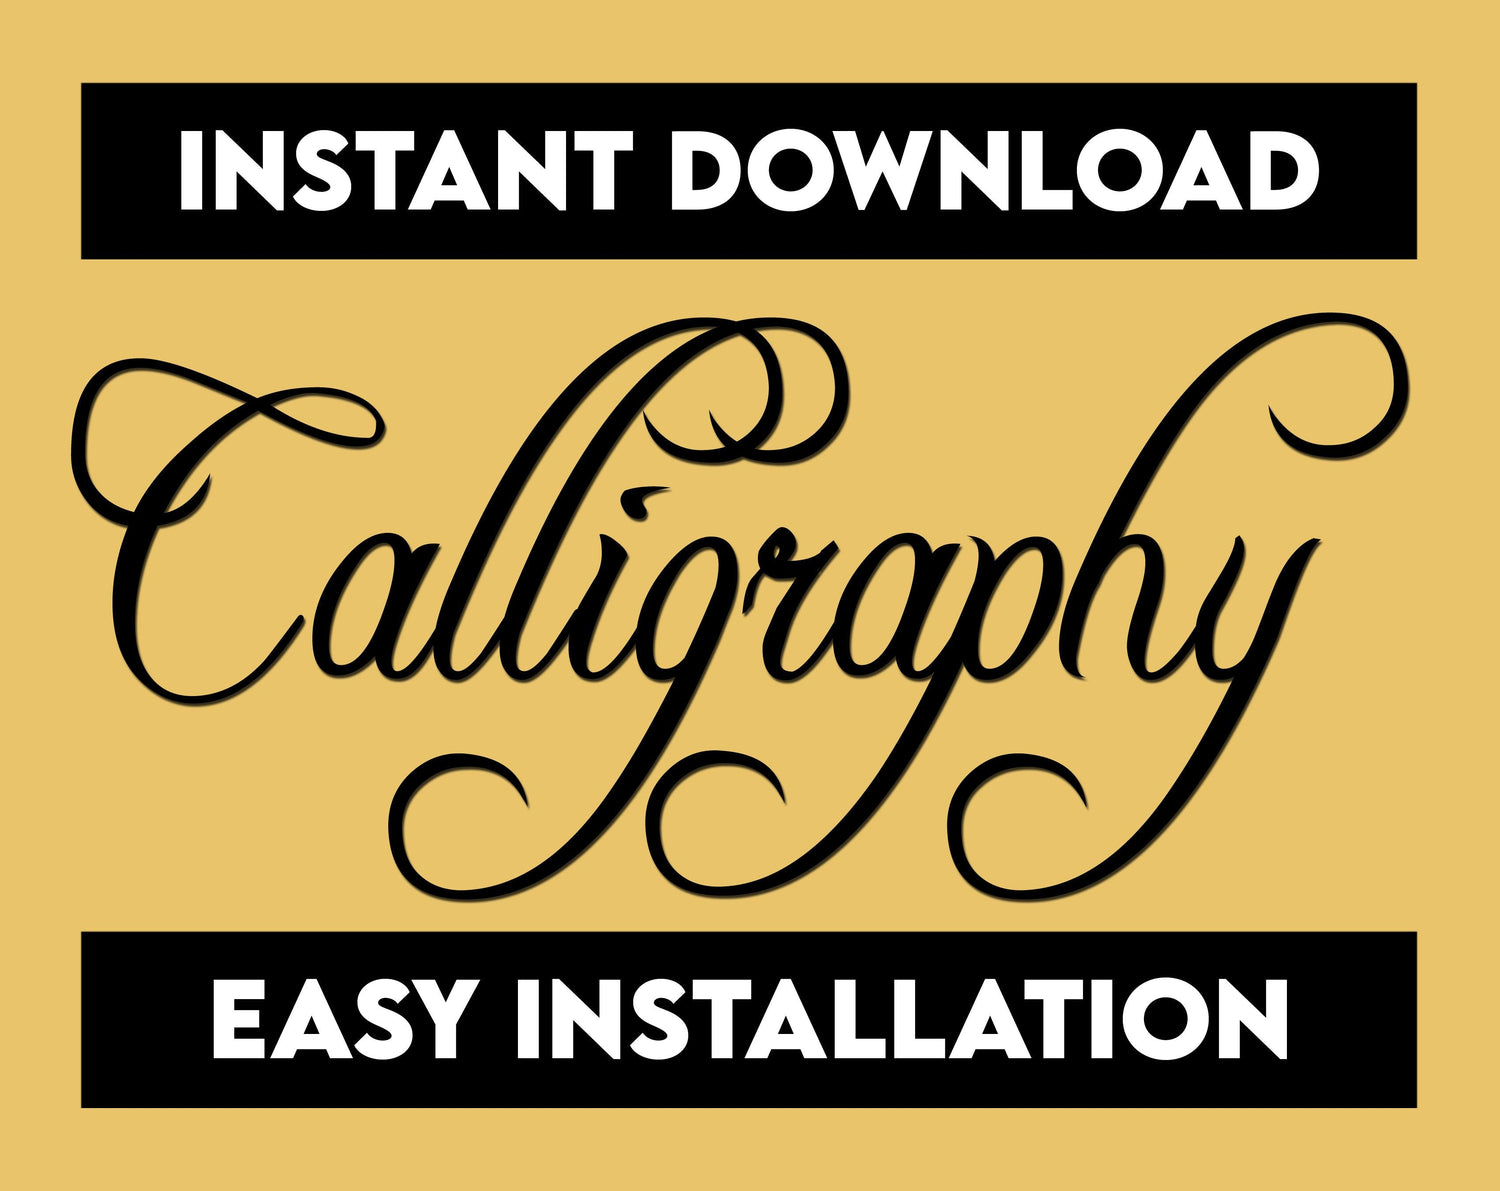 Calligraphy Font - Trustful Design